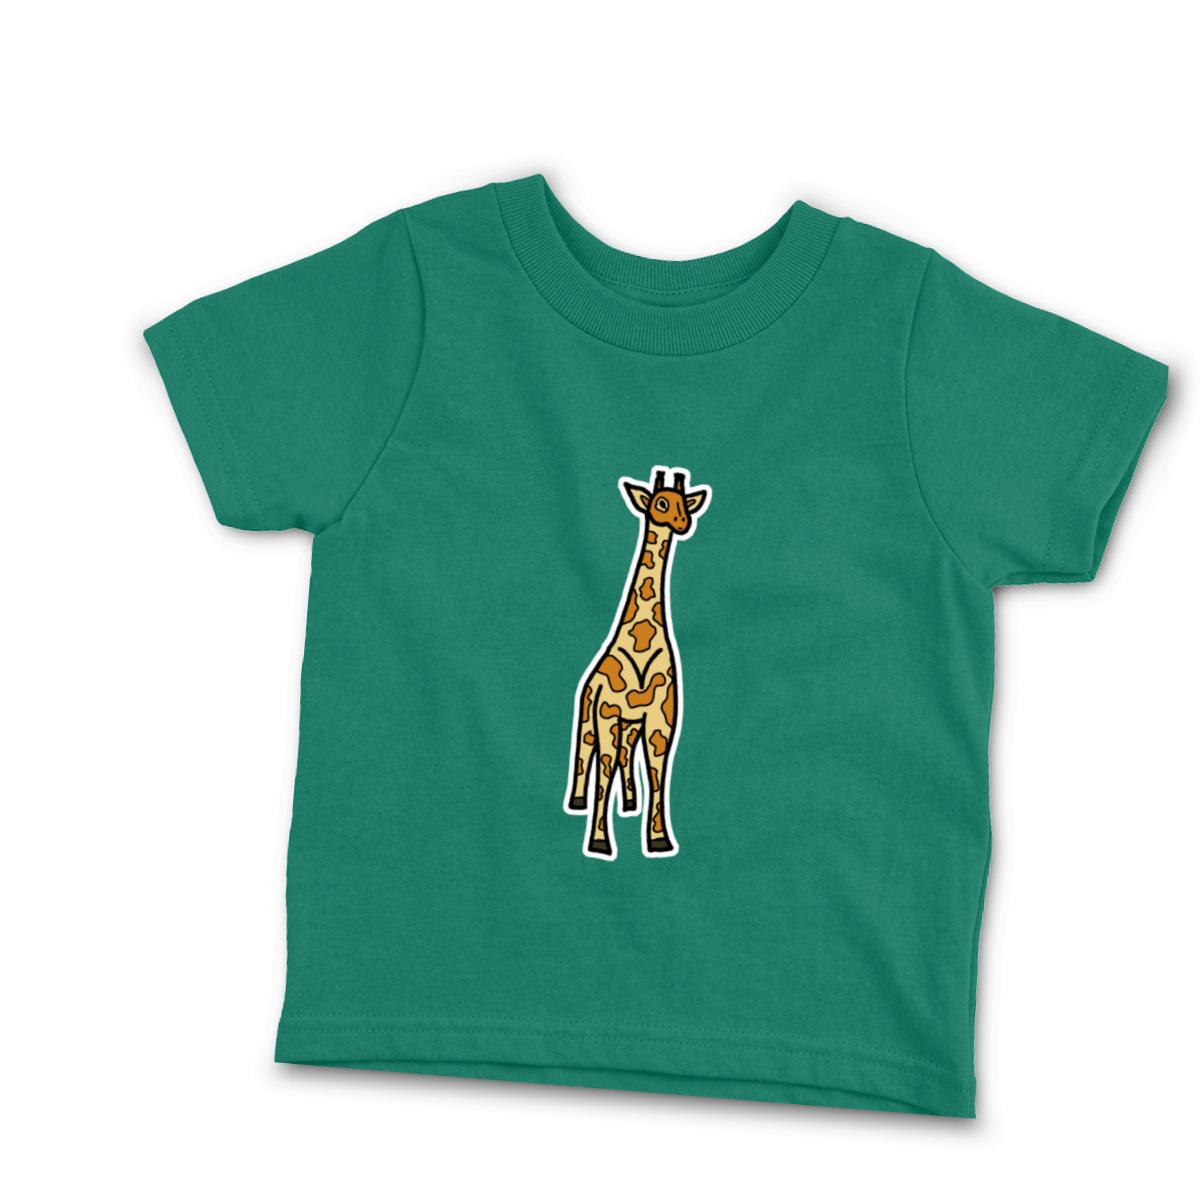 Toy Giraffe Toddler Tee 56T kelly